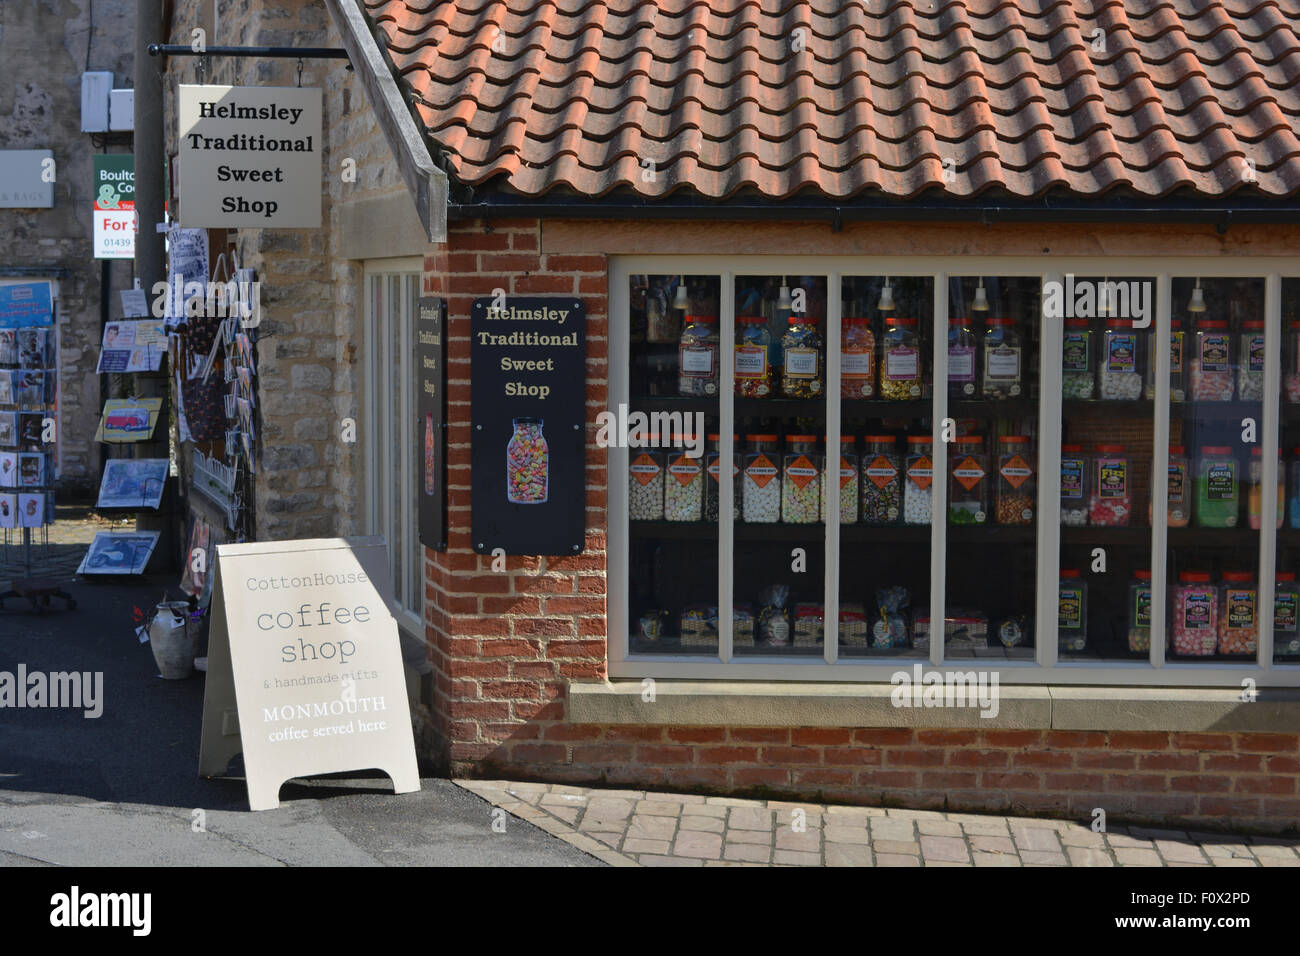 Dolce tradizionale Shop esterno, Helmsley, North Yorkshire, Inghilterra Foto Stock